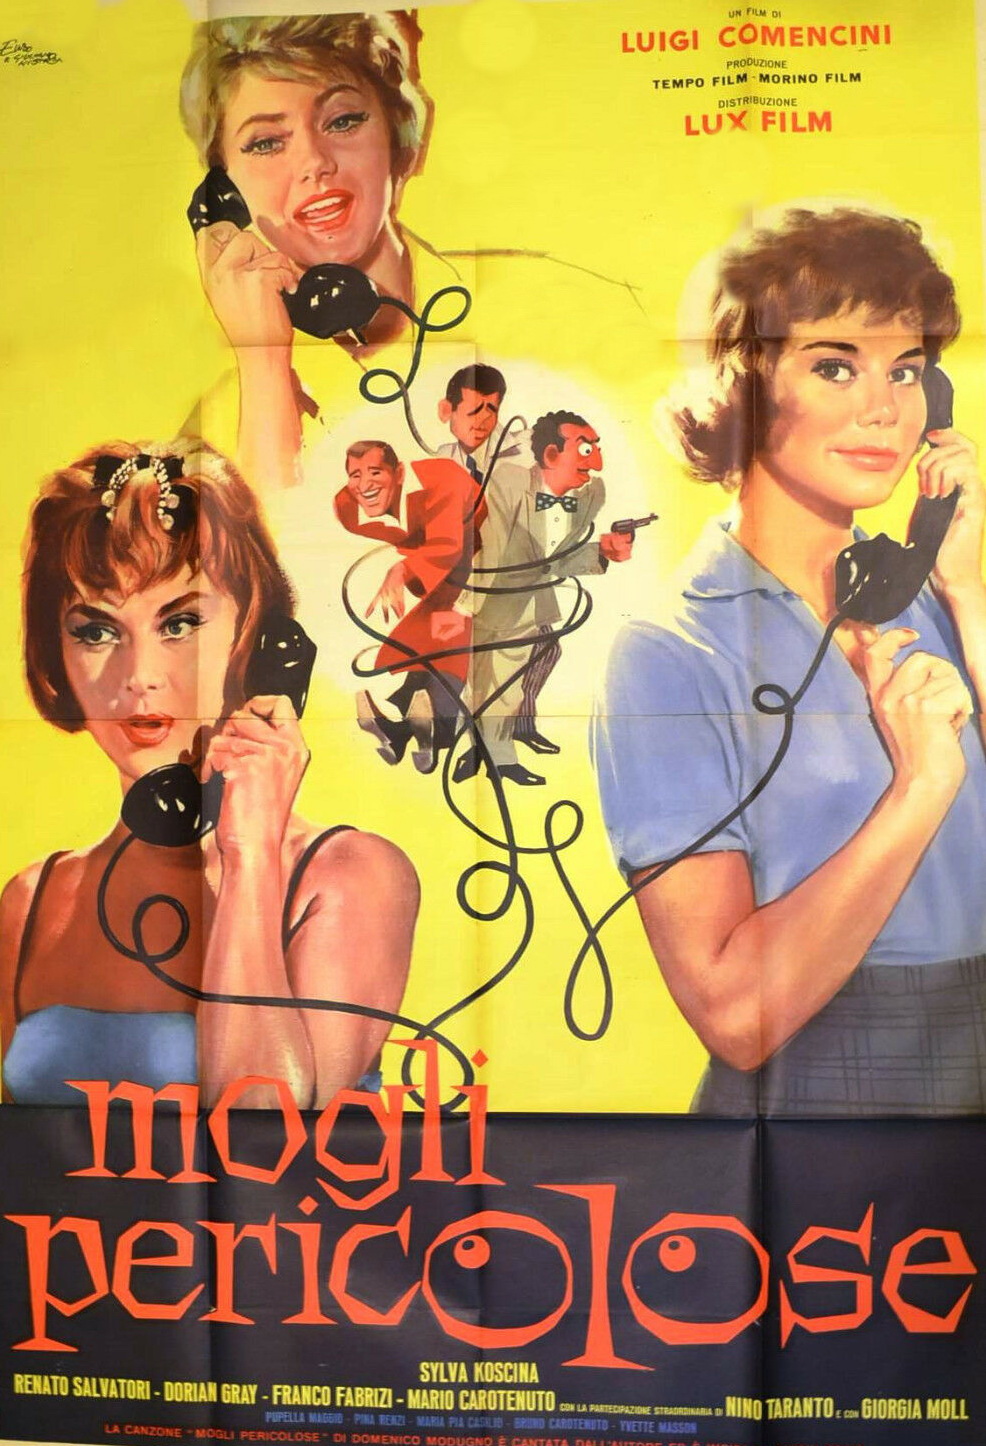 Mogli pericolose (1958) Screenshot 2